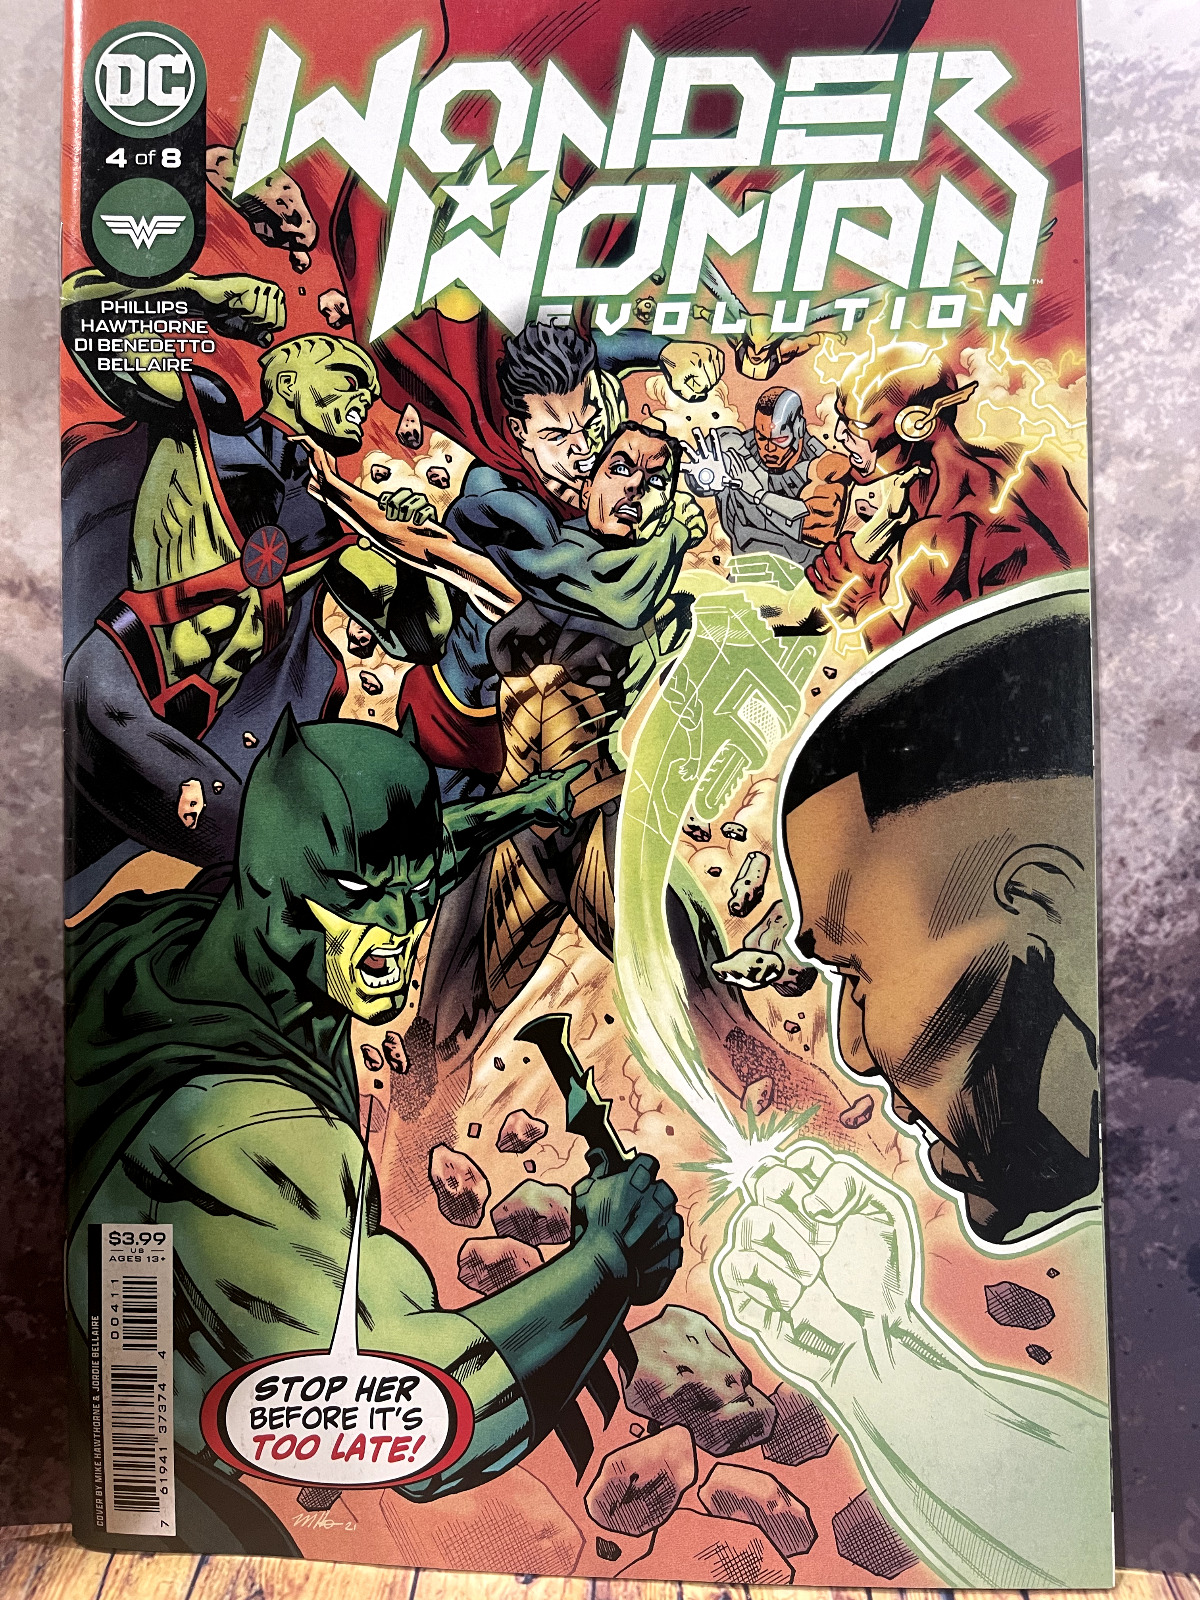 Wonder Woman Evolution #4 (of 8) (DC Comics)